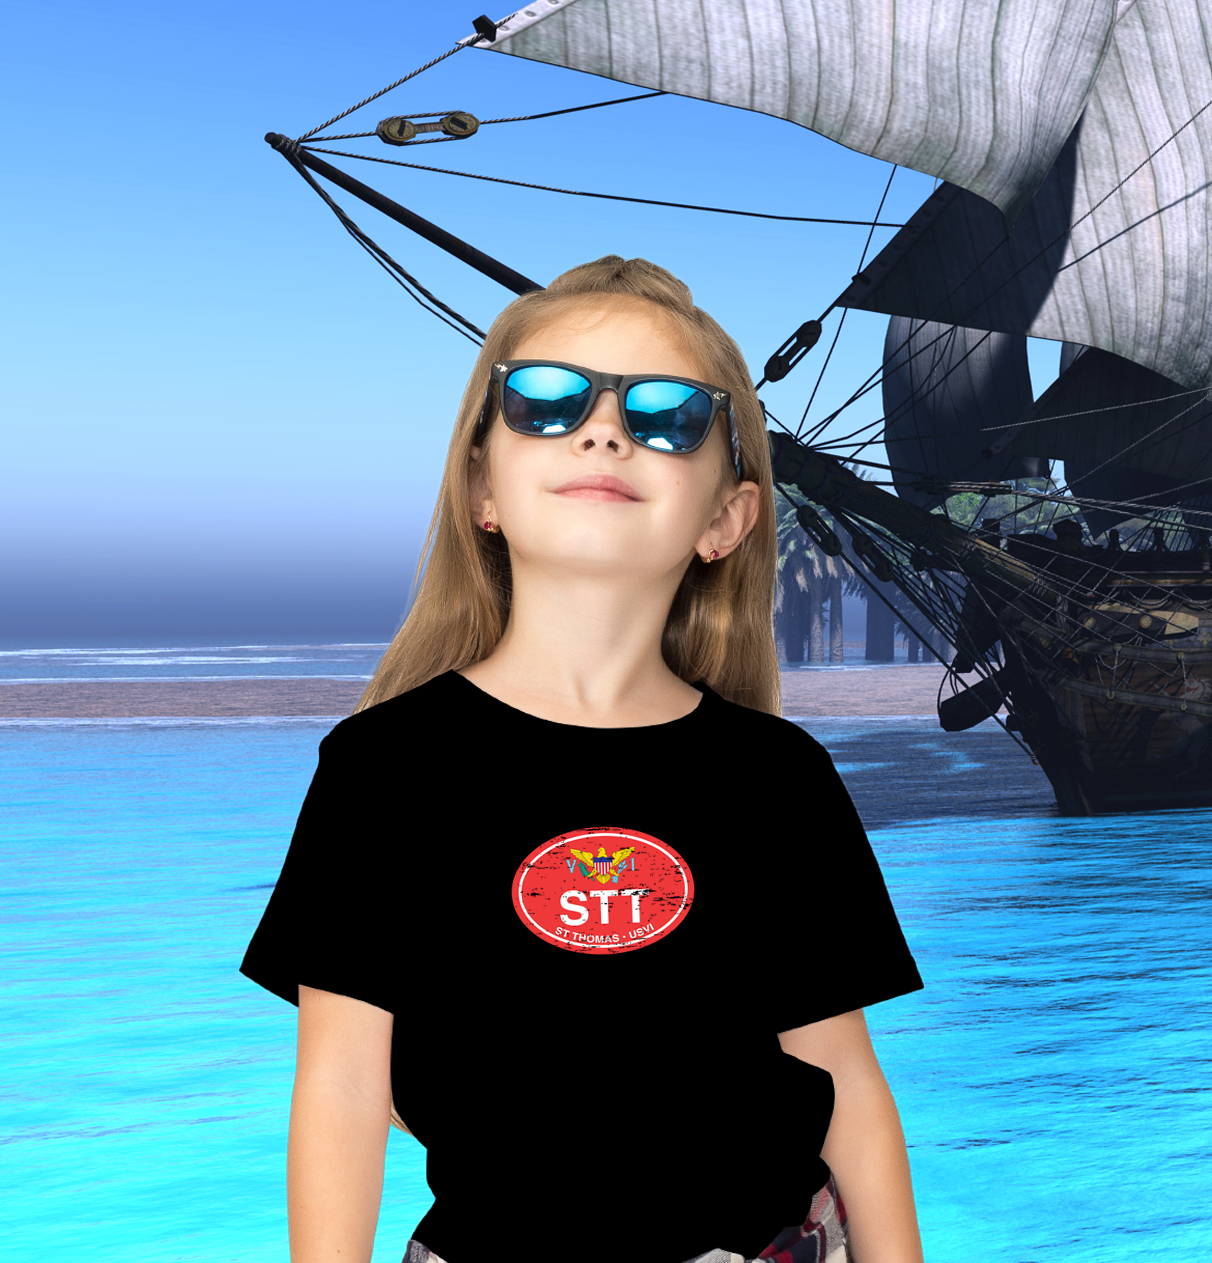 St Thomas Flag Youth T-Shirt - My Destination Location